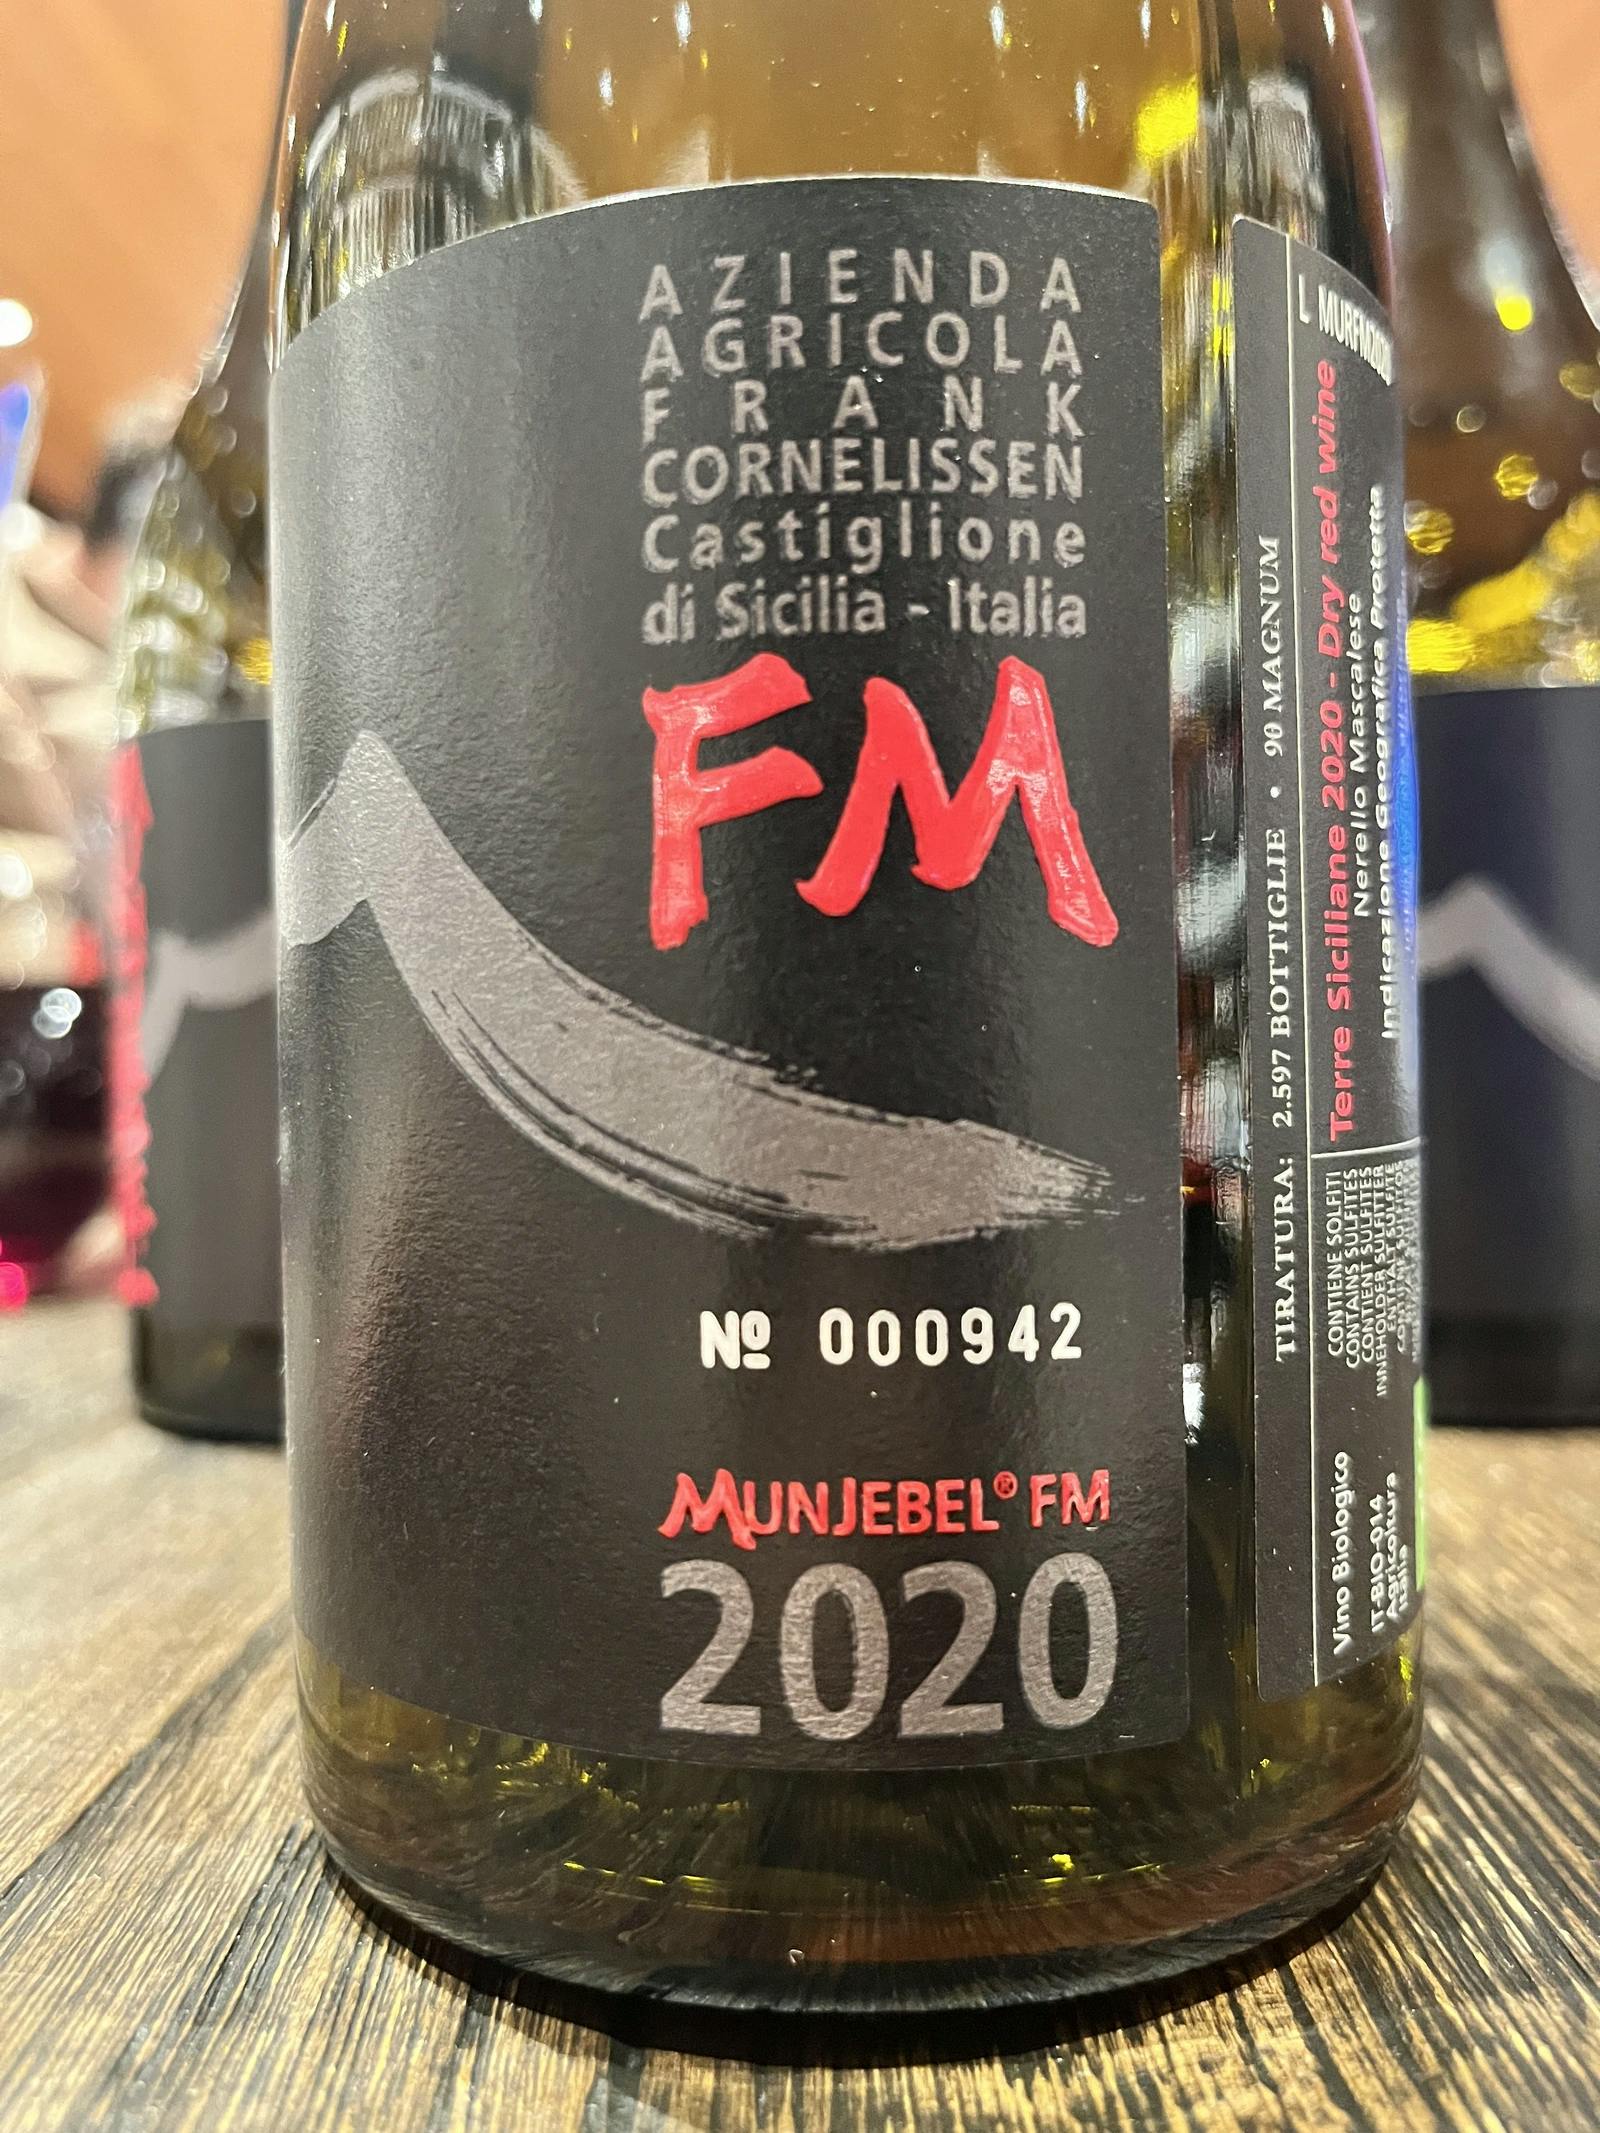 Frank Cornelissen Munjebel FM 2020